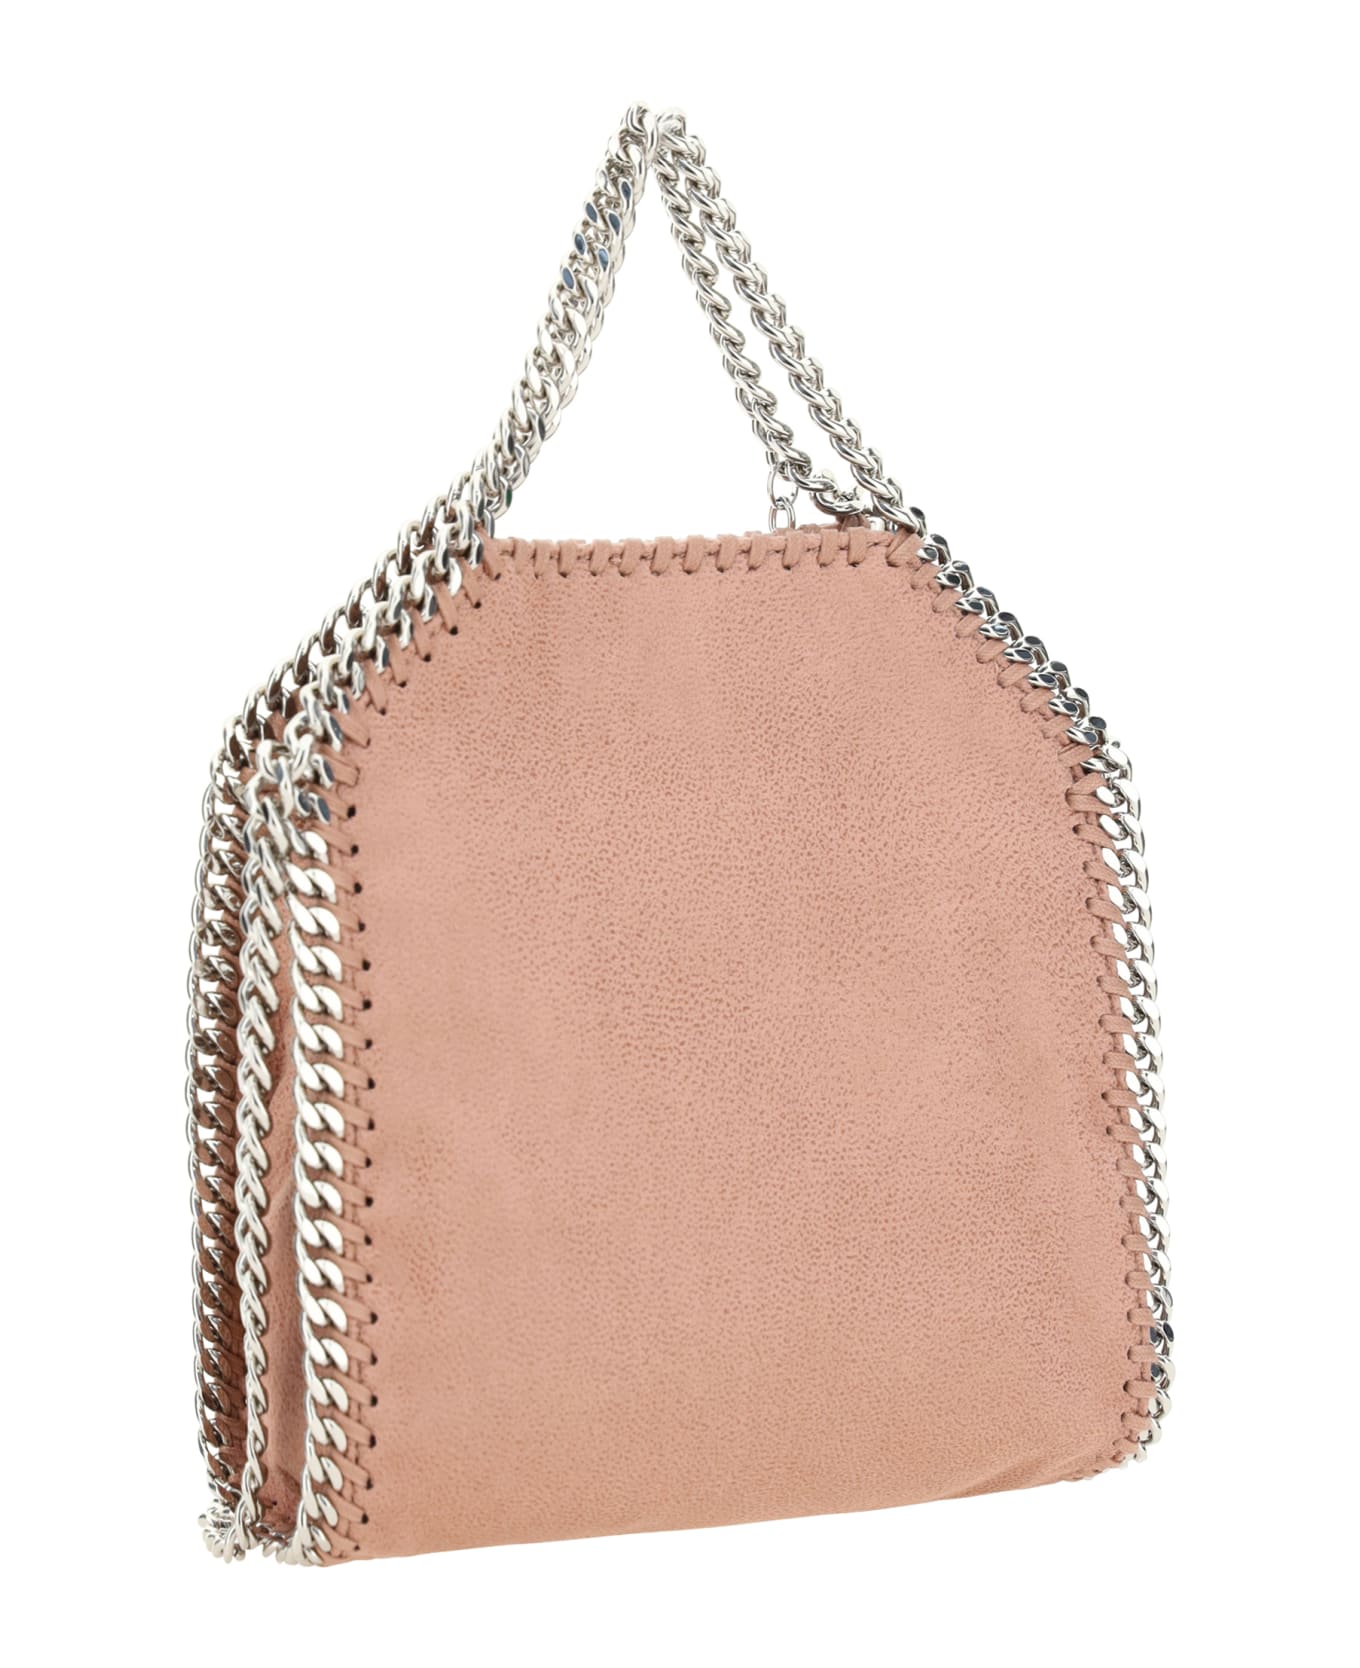 Stella McCartney Tiny 'falabella' Handbag - Chain Pink トートバッグ